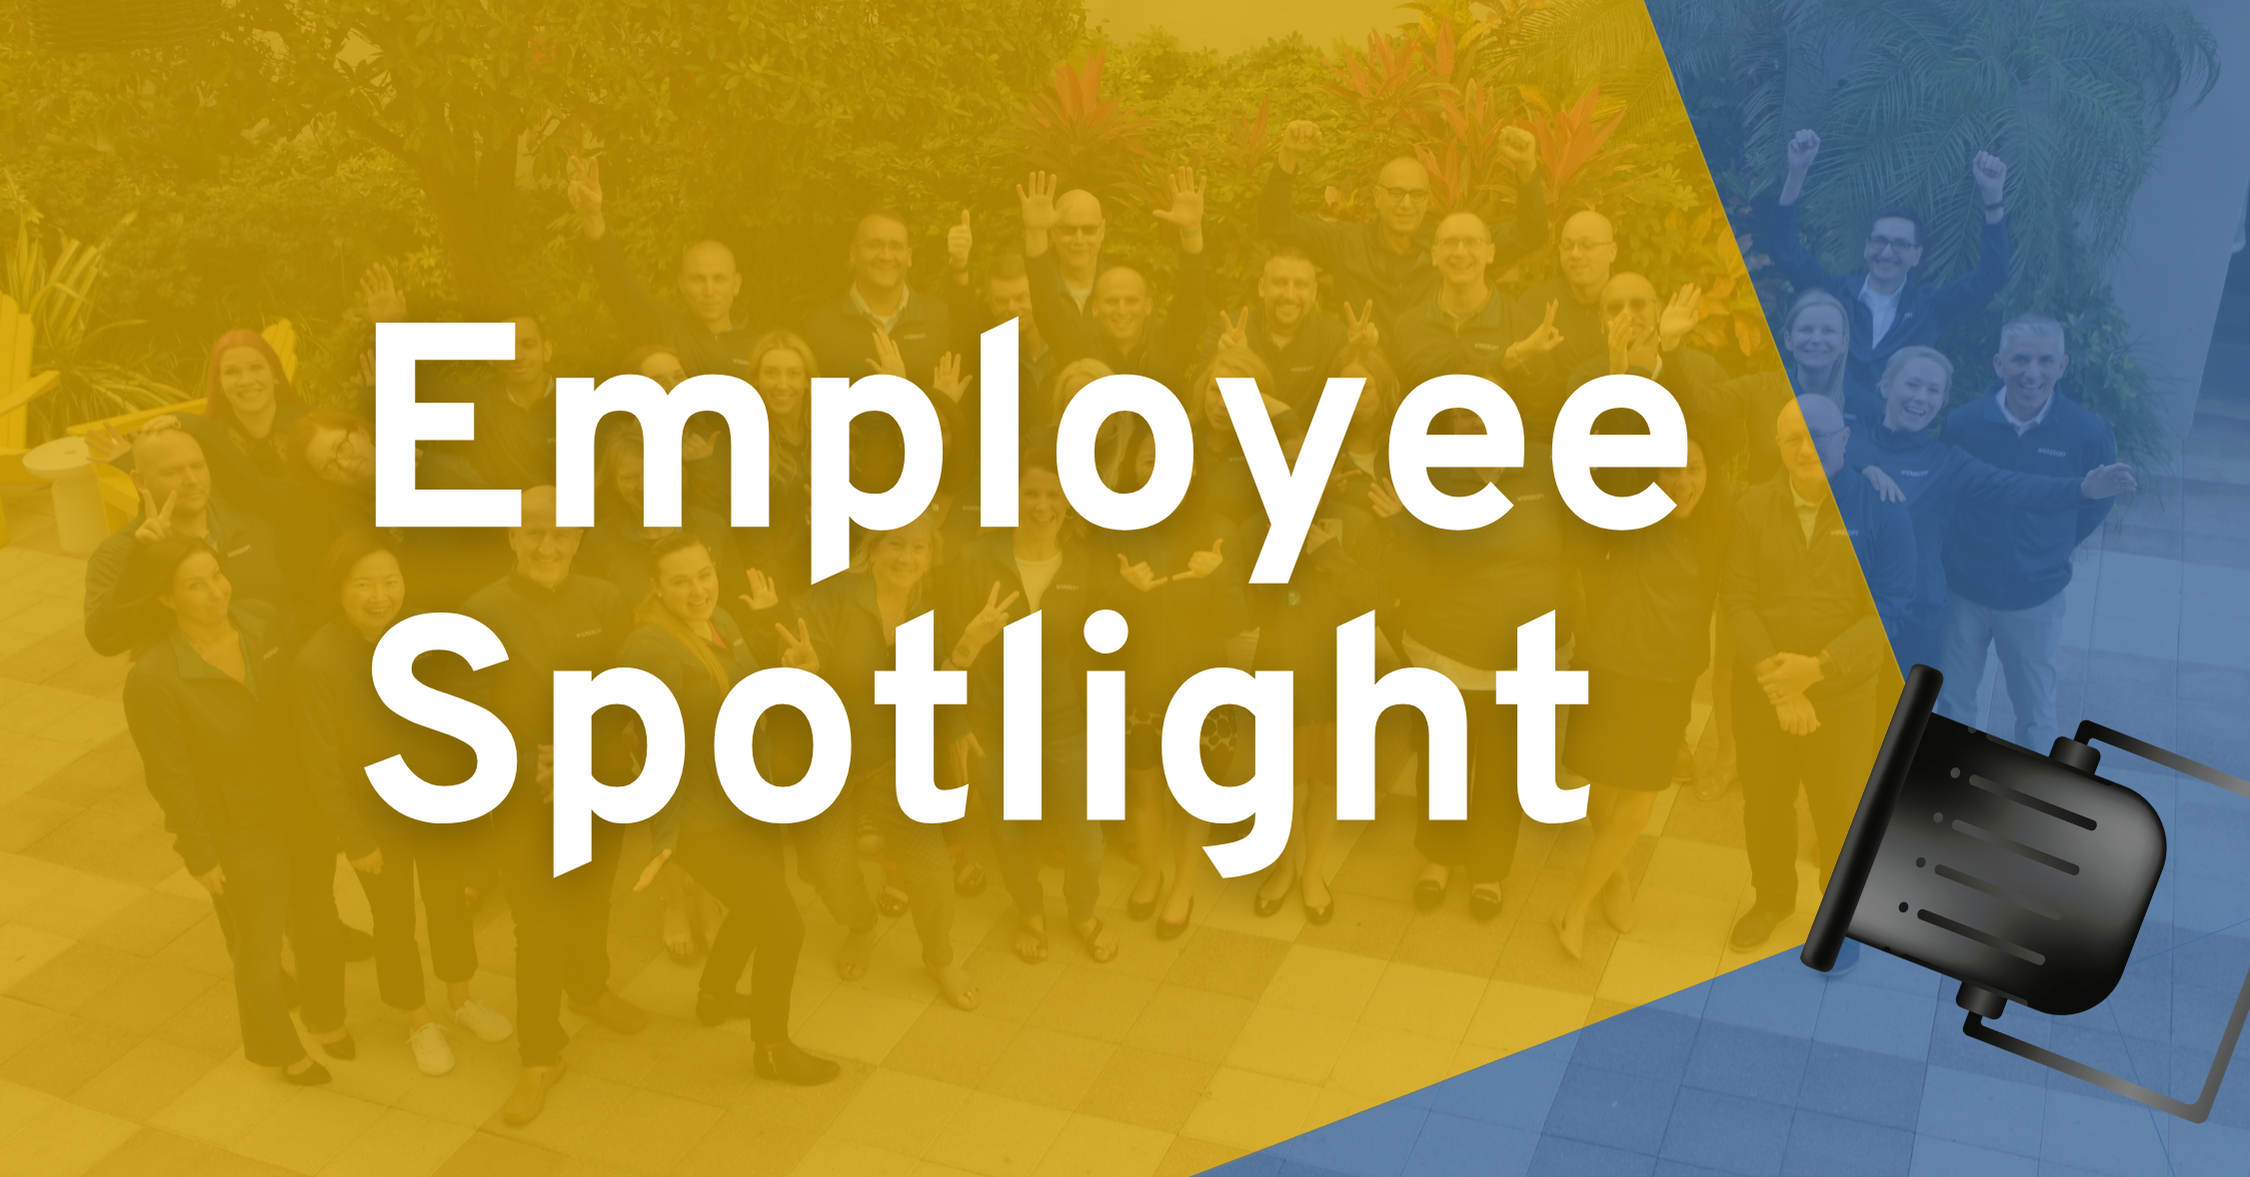 Employee Spotlight - Wicresoft Promotes Mike Chamblin